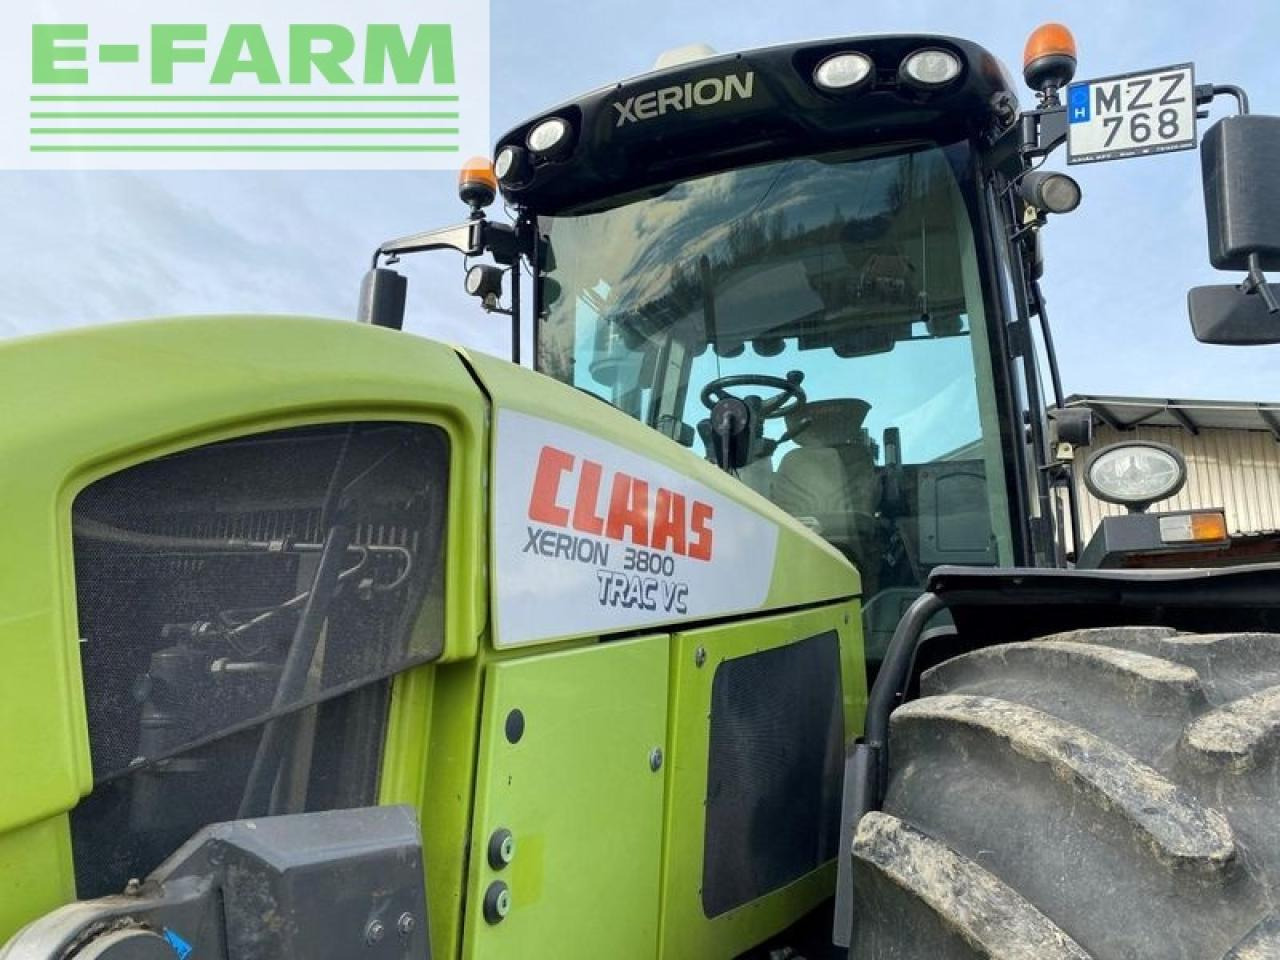 Farm tractor CLAAS xerion 3800 vc